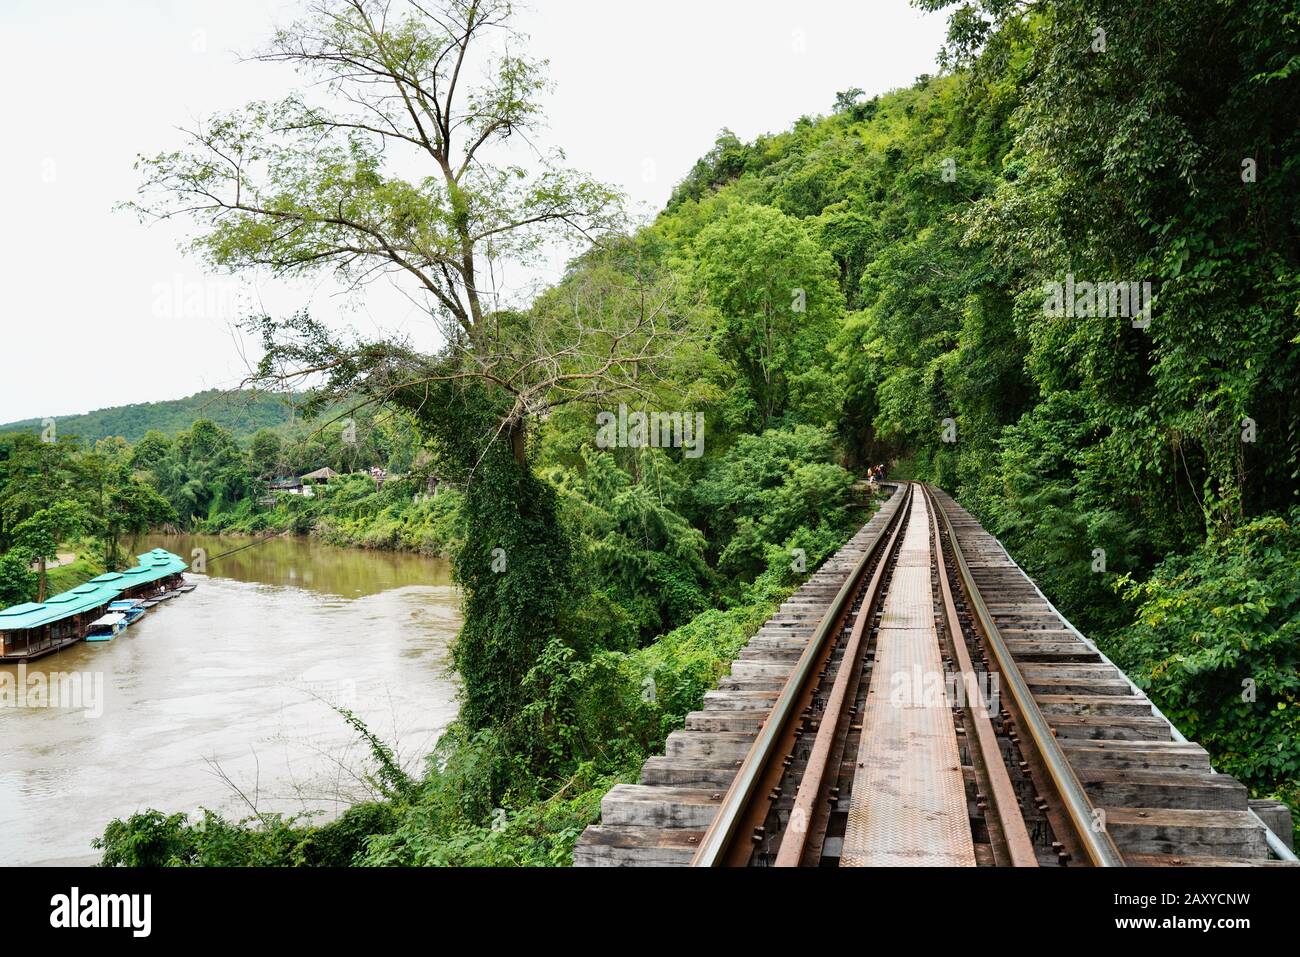 Walking along the train tracks of the Death Railway near Tham Krasae Bridge, Thailand Stock Photo